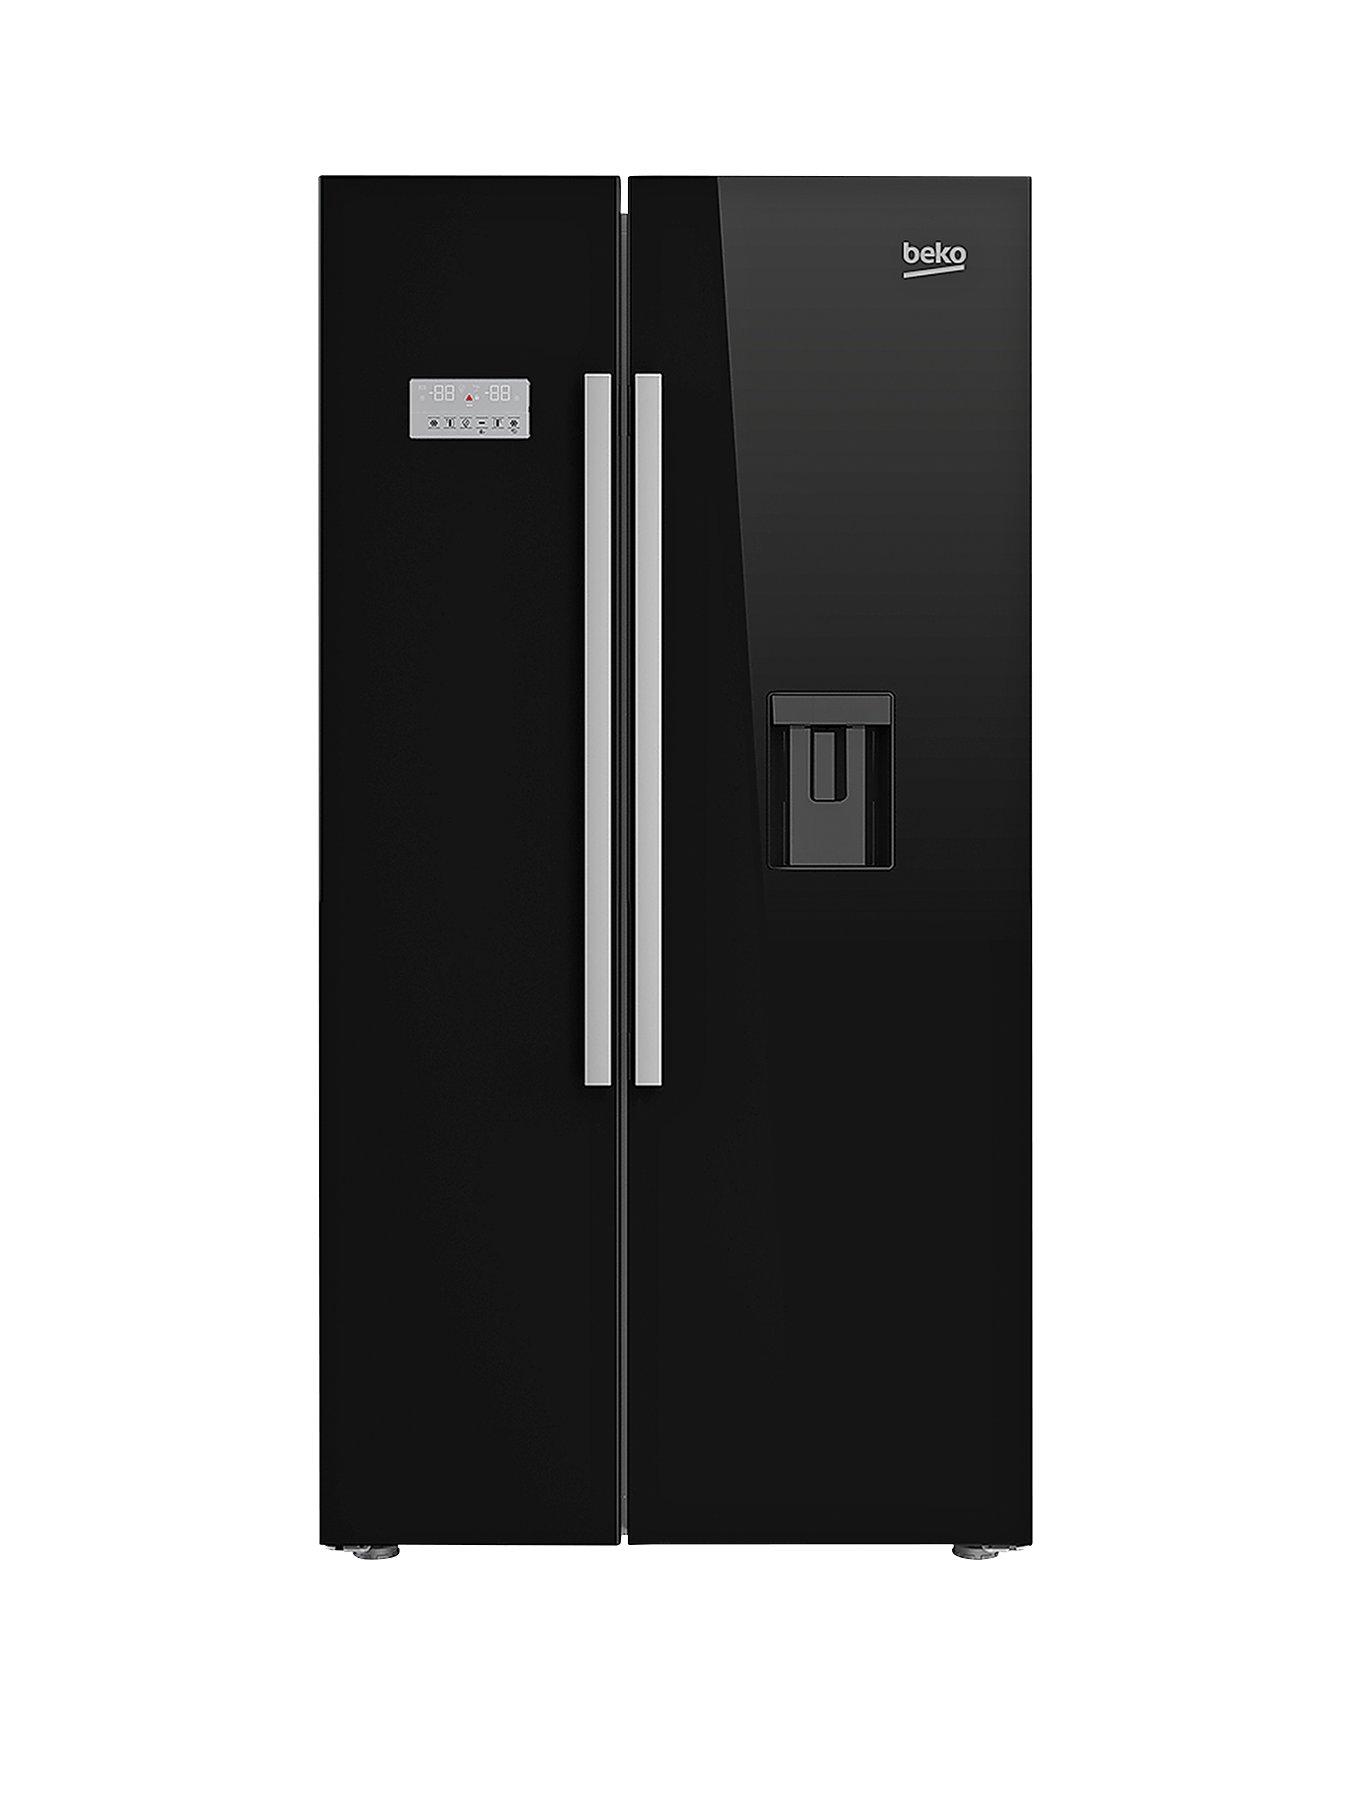 Beko Asd241B American-Style Fridge Freezer With Non-Plumbed Water Dispenser – Black